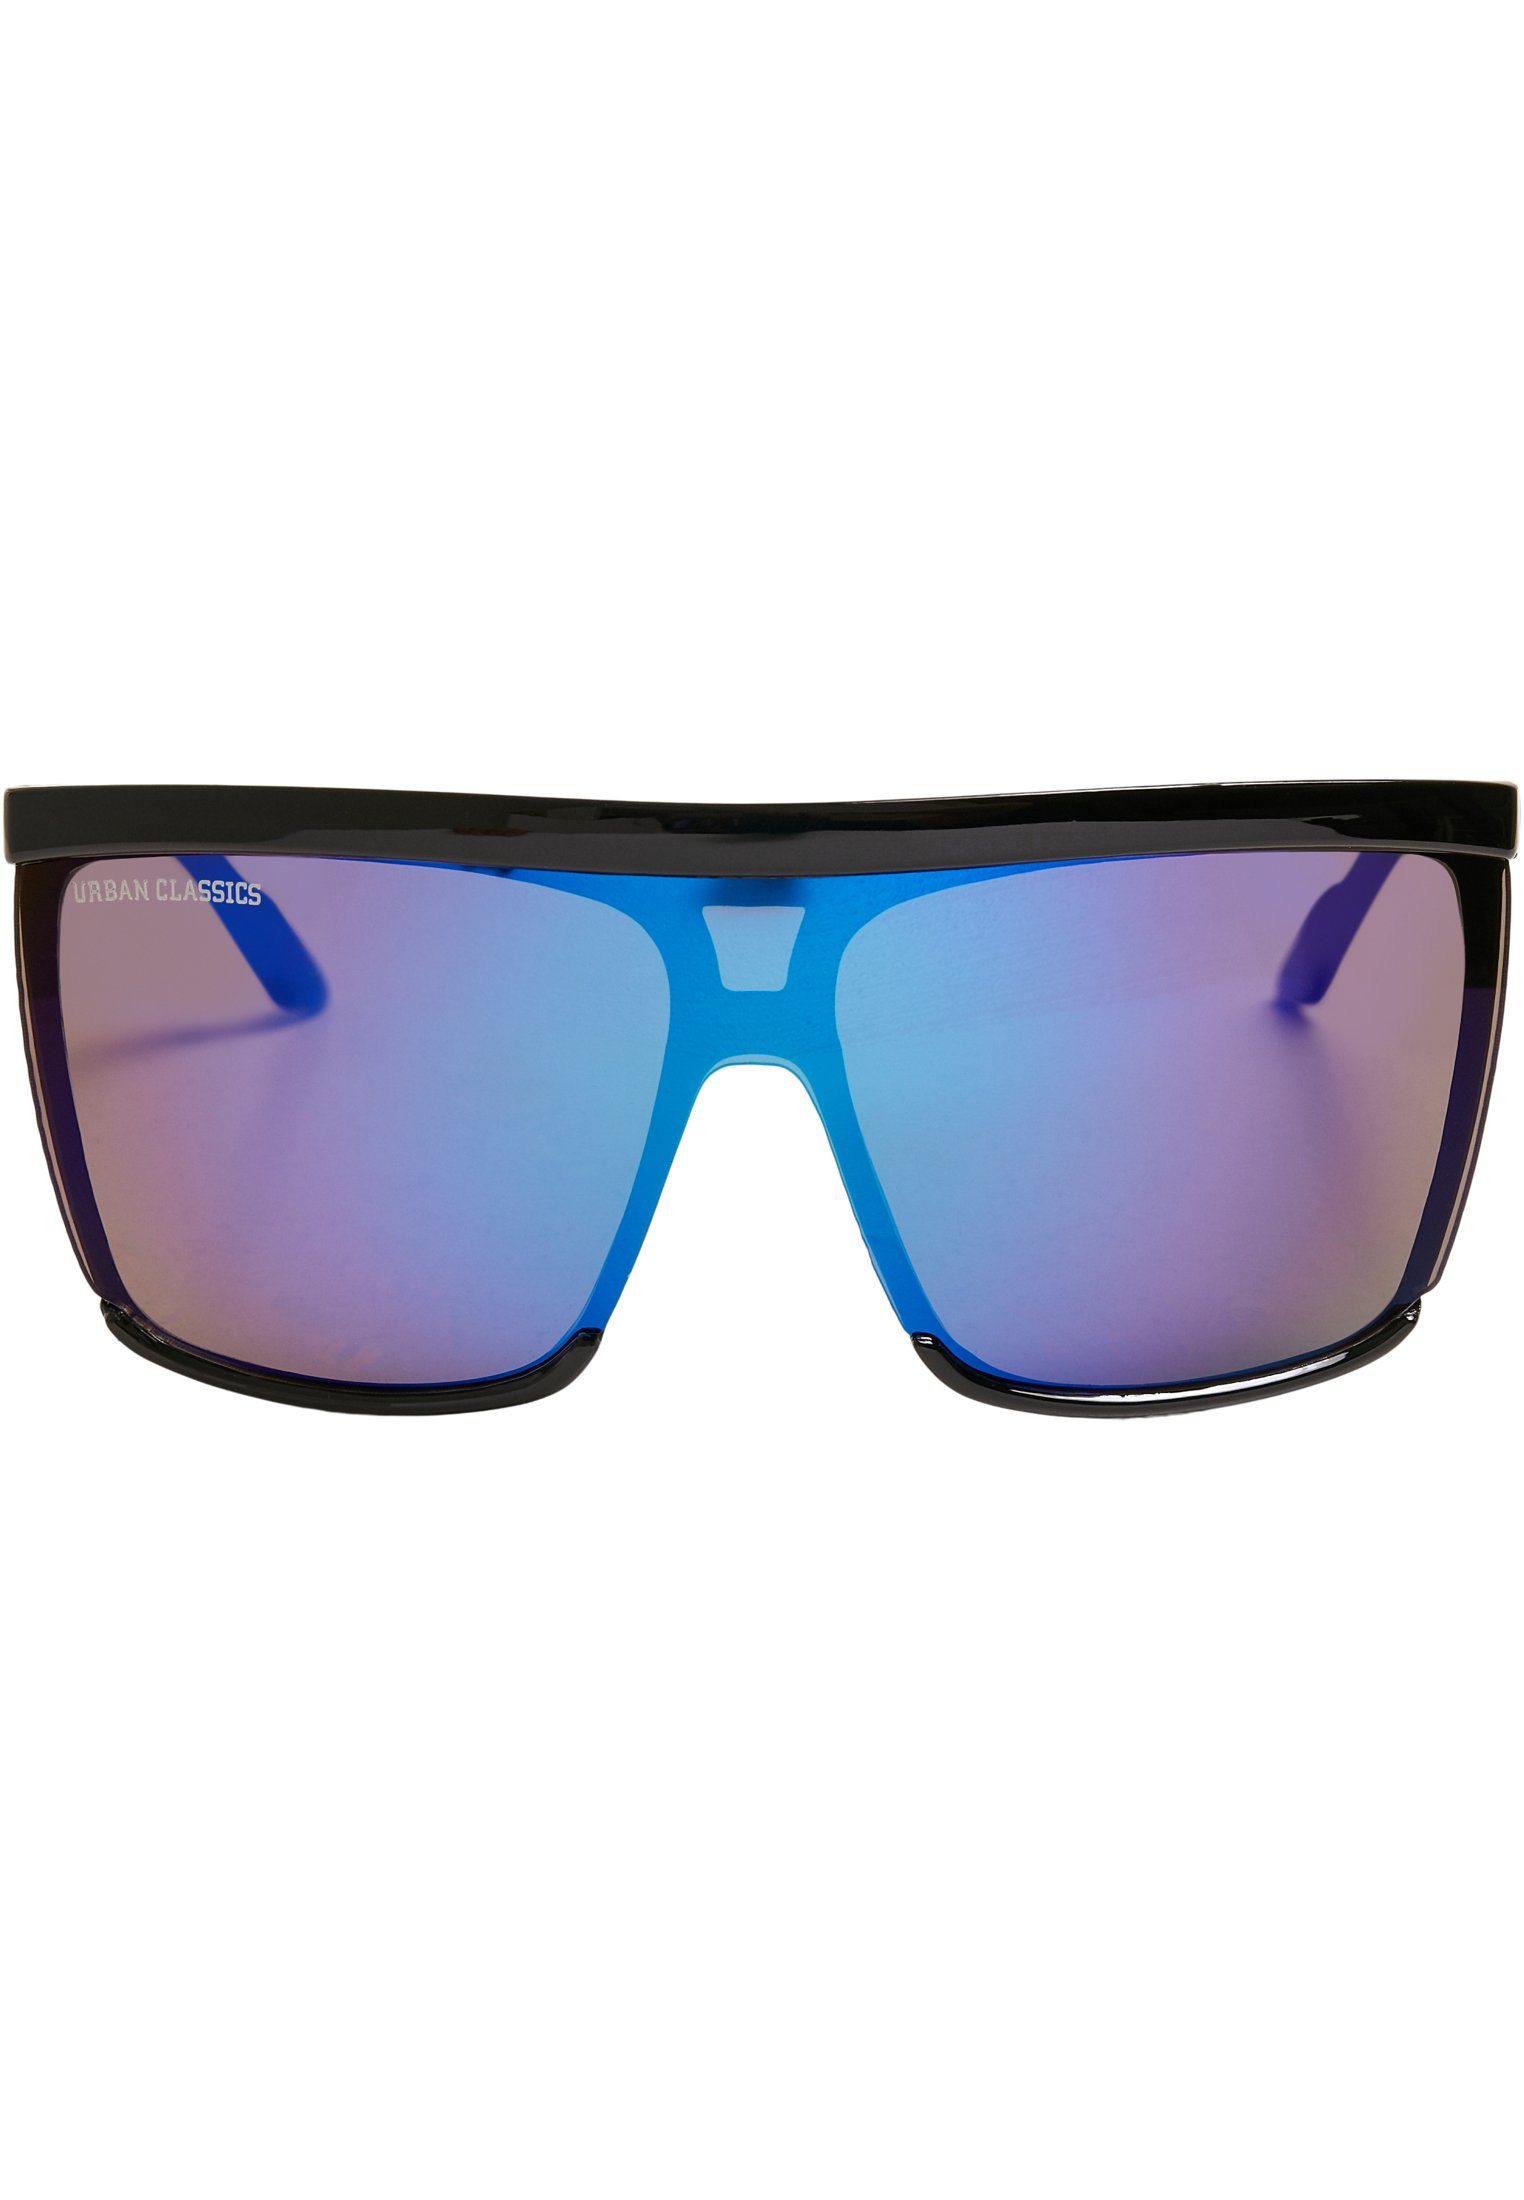 URBAN Accessoires black/multicolor Sunglasses Sonnenbrille CLASSICS 112 UC